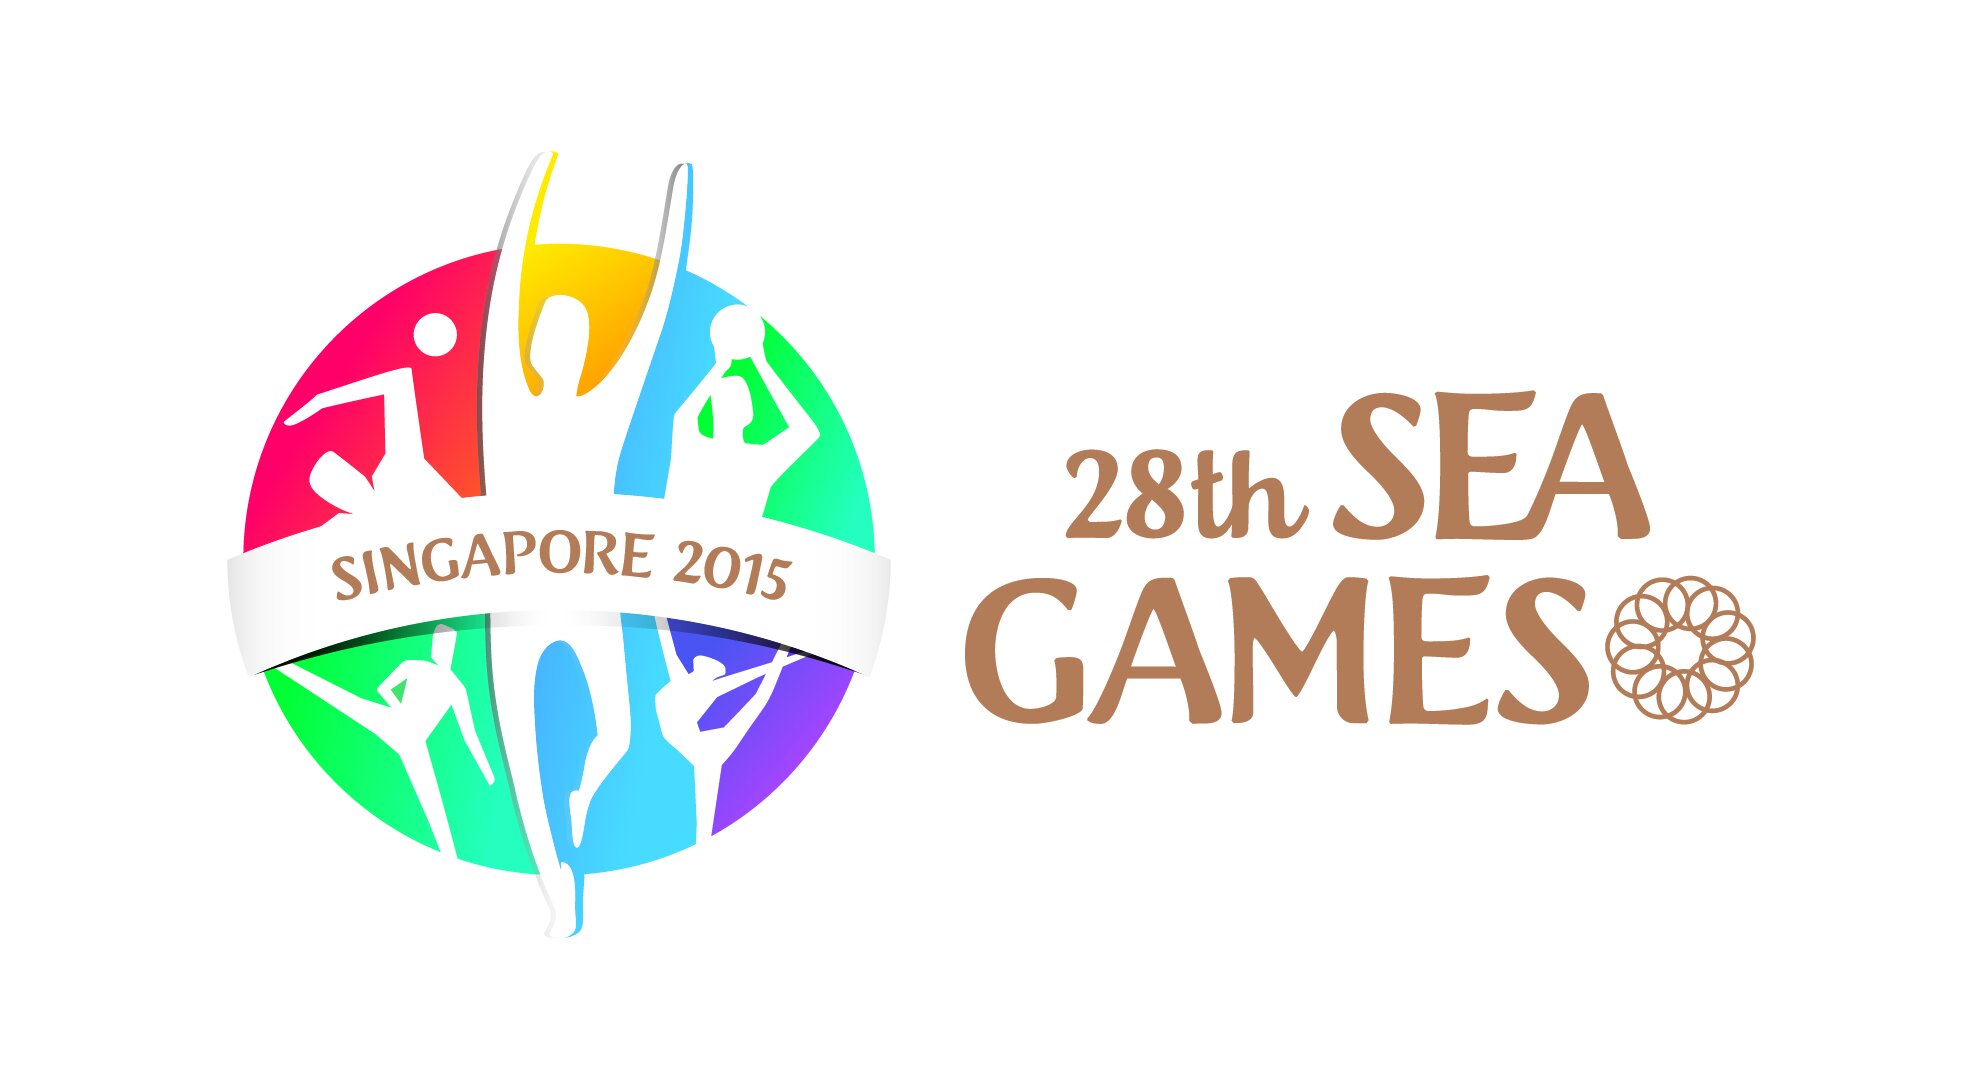 SEA Games 2015 Singapore